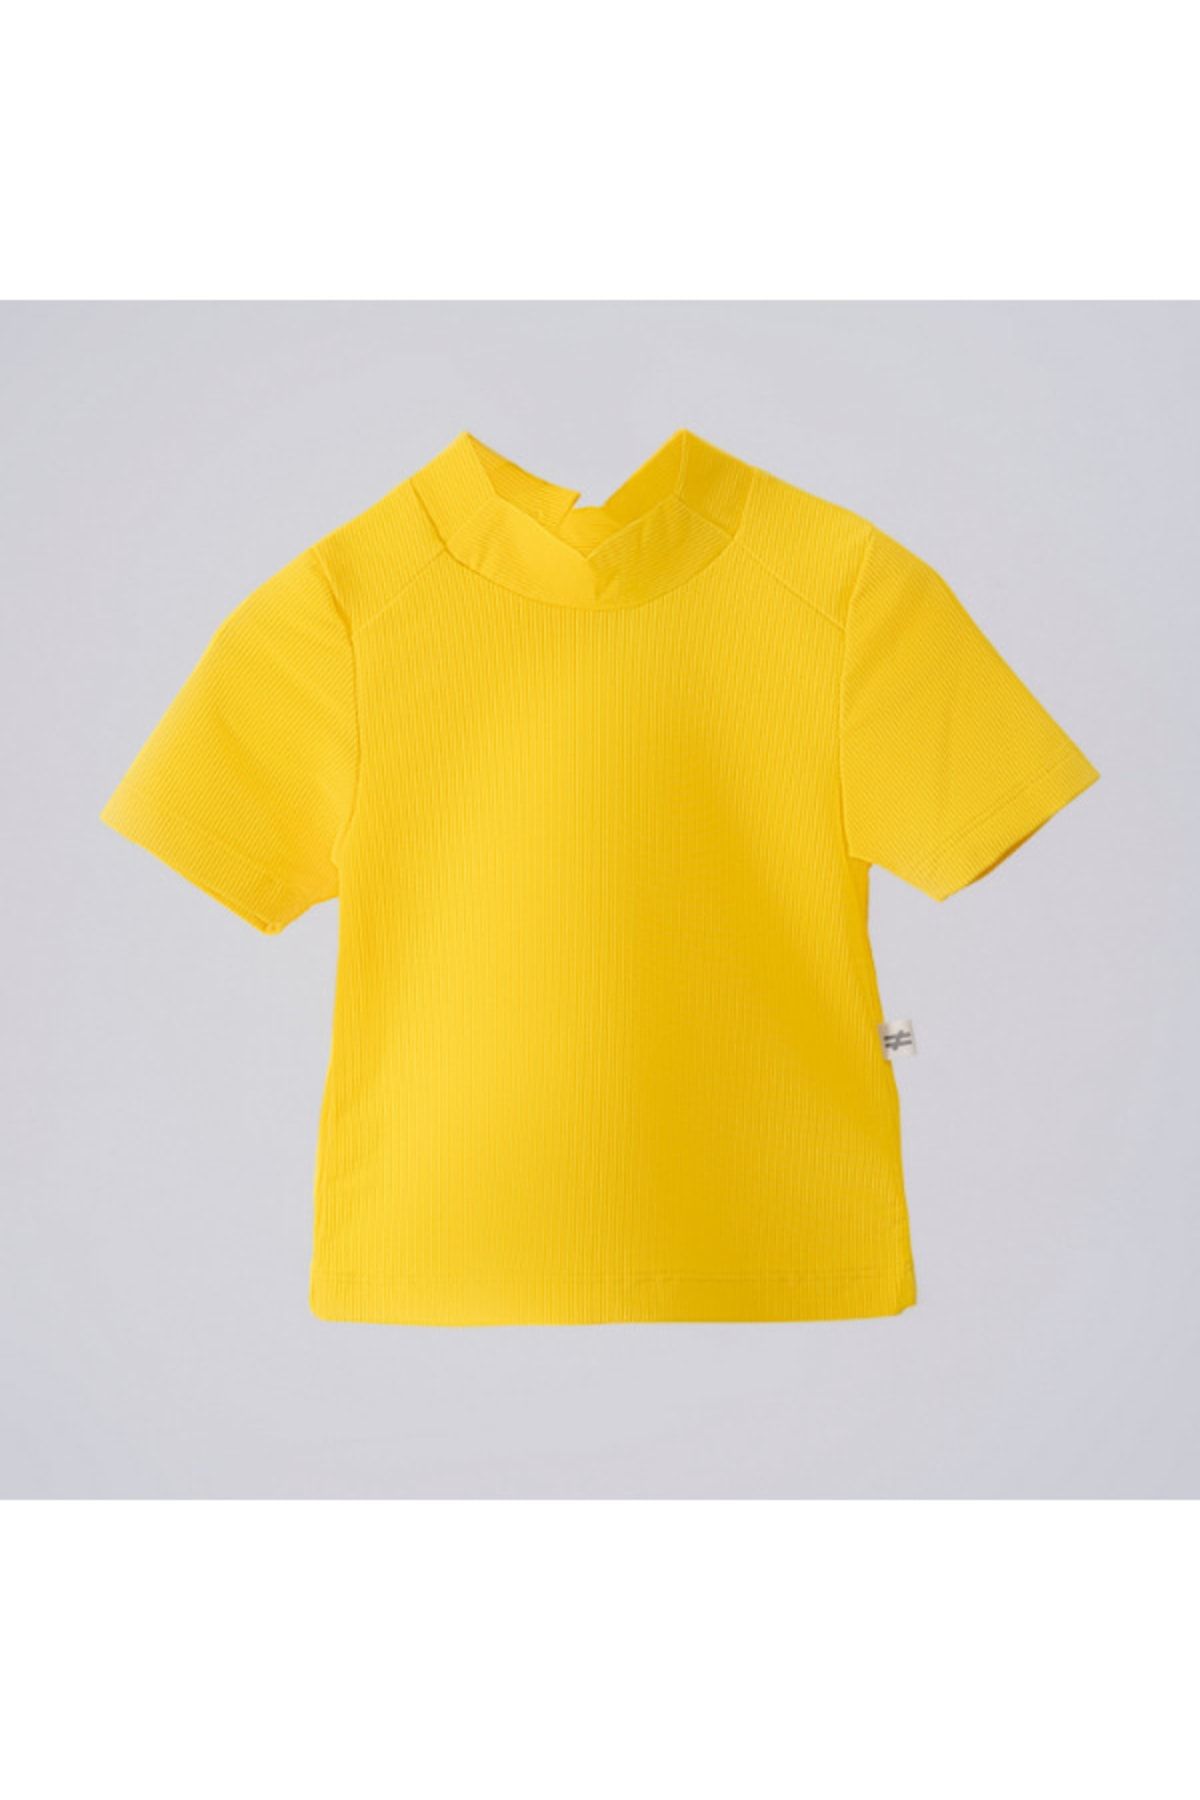 Moi Noi T-shirt Mayo Çizgili Sarı